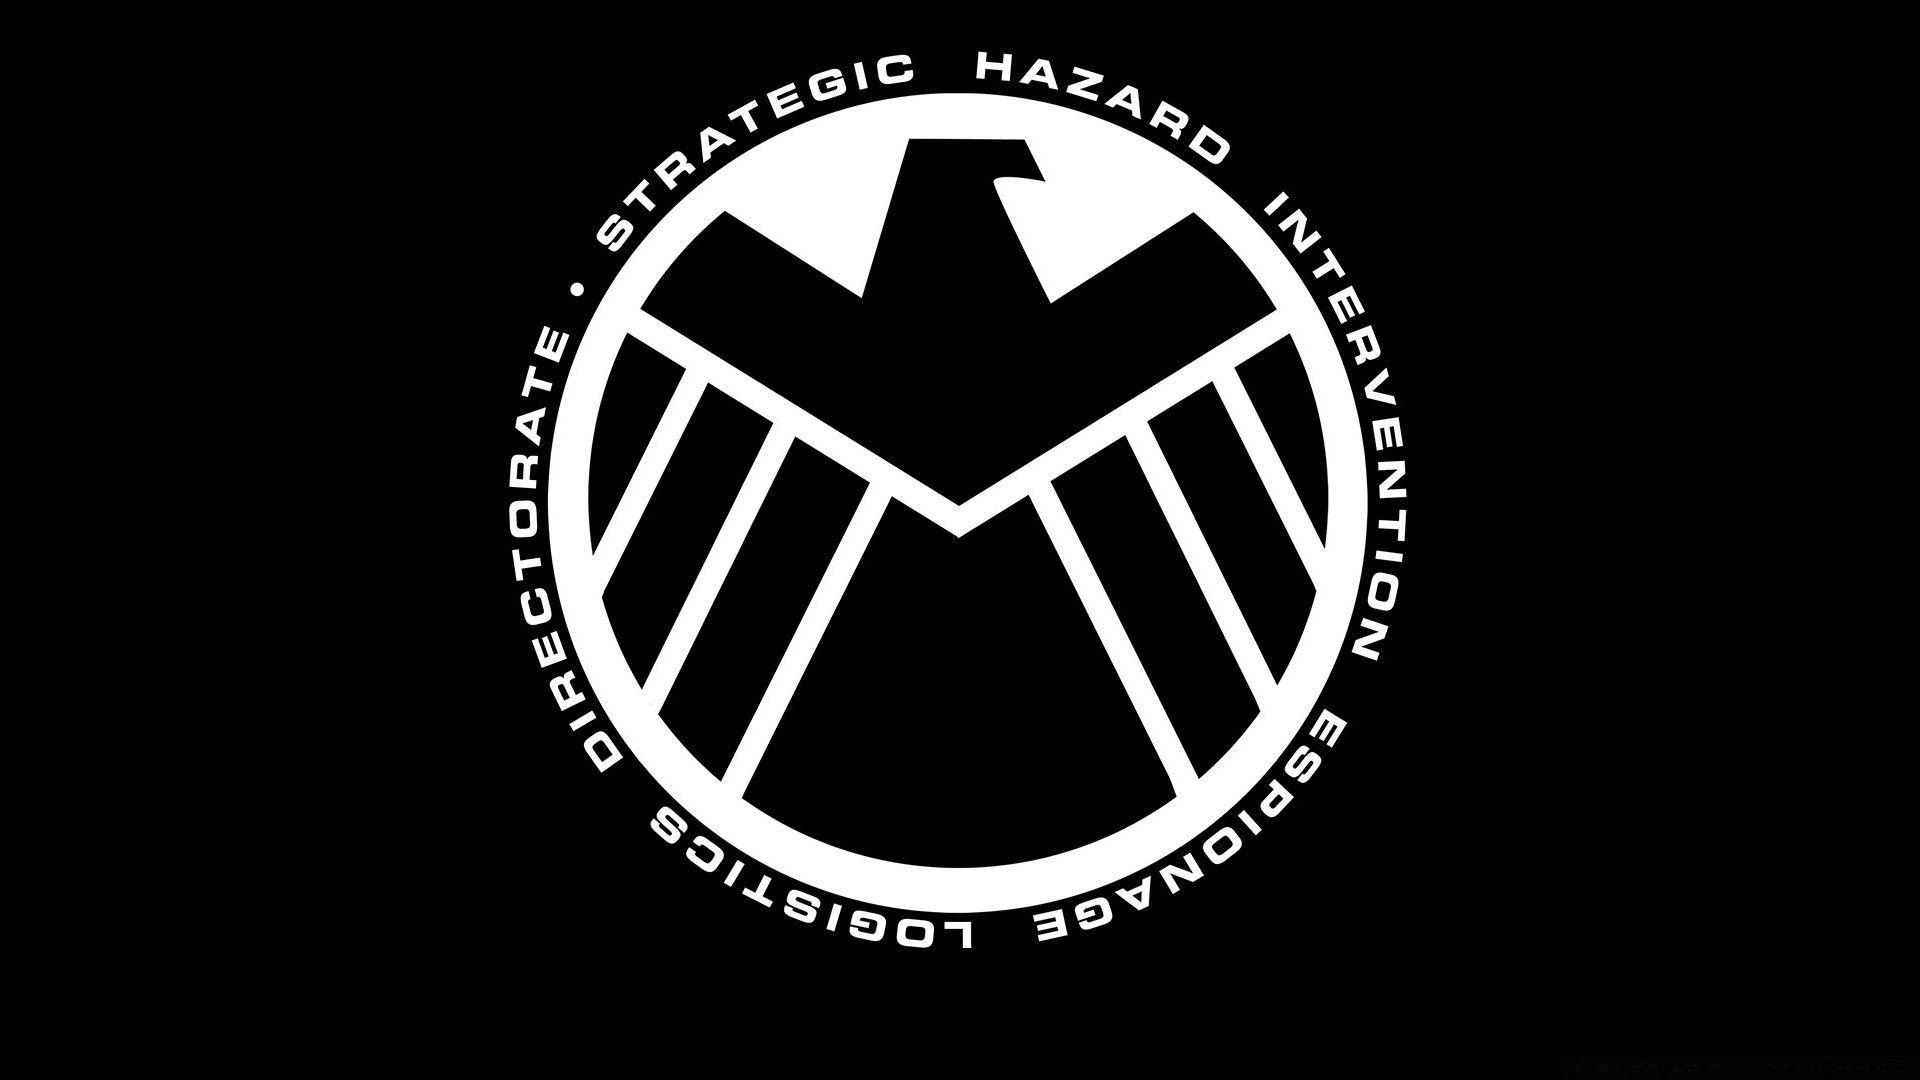 Marvel Avengers Shield Logo. Android wallpaper for free